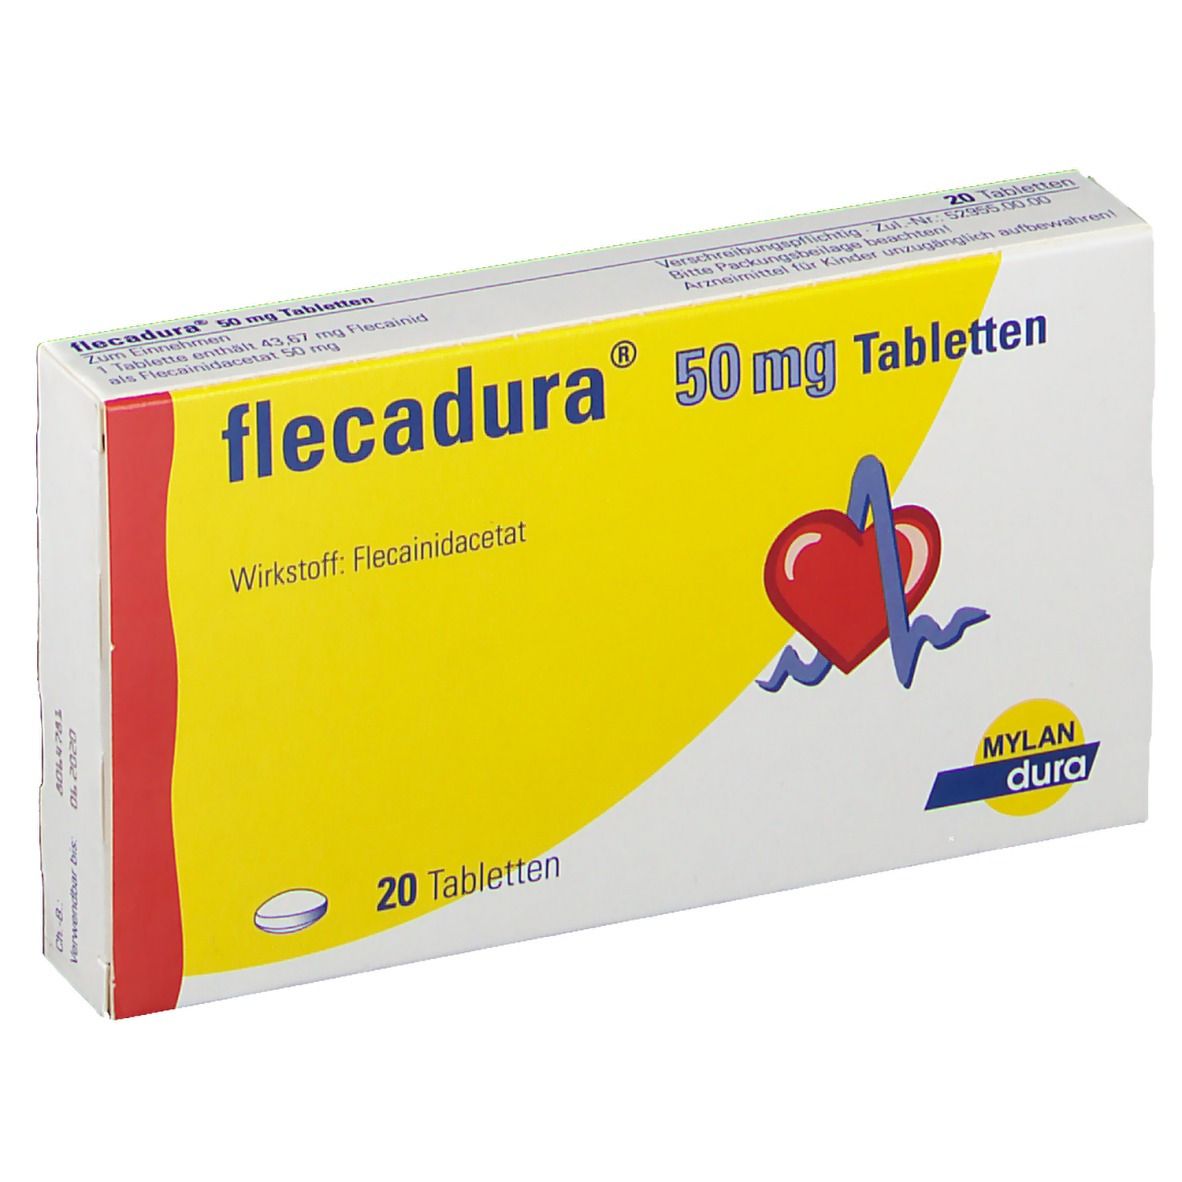 flecadura® 50 mg